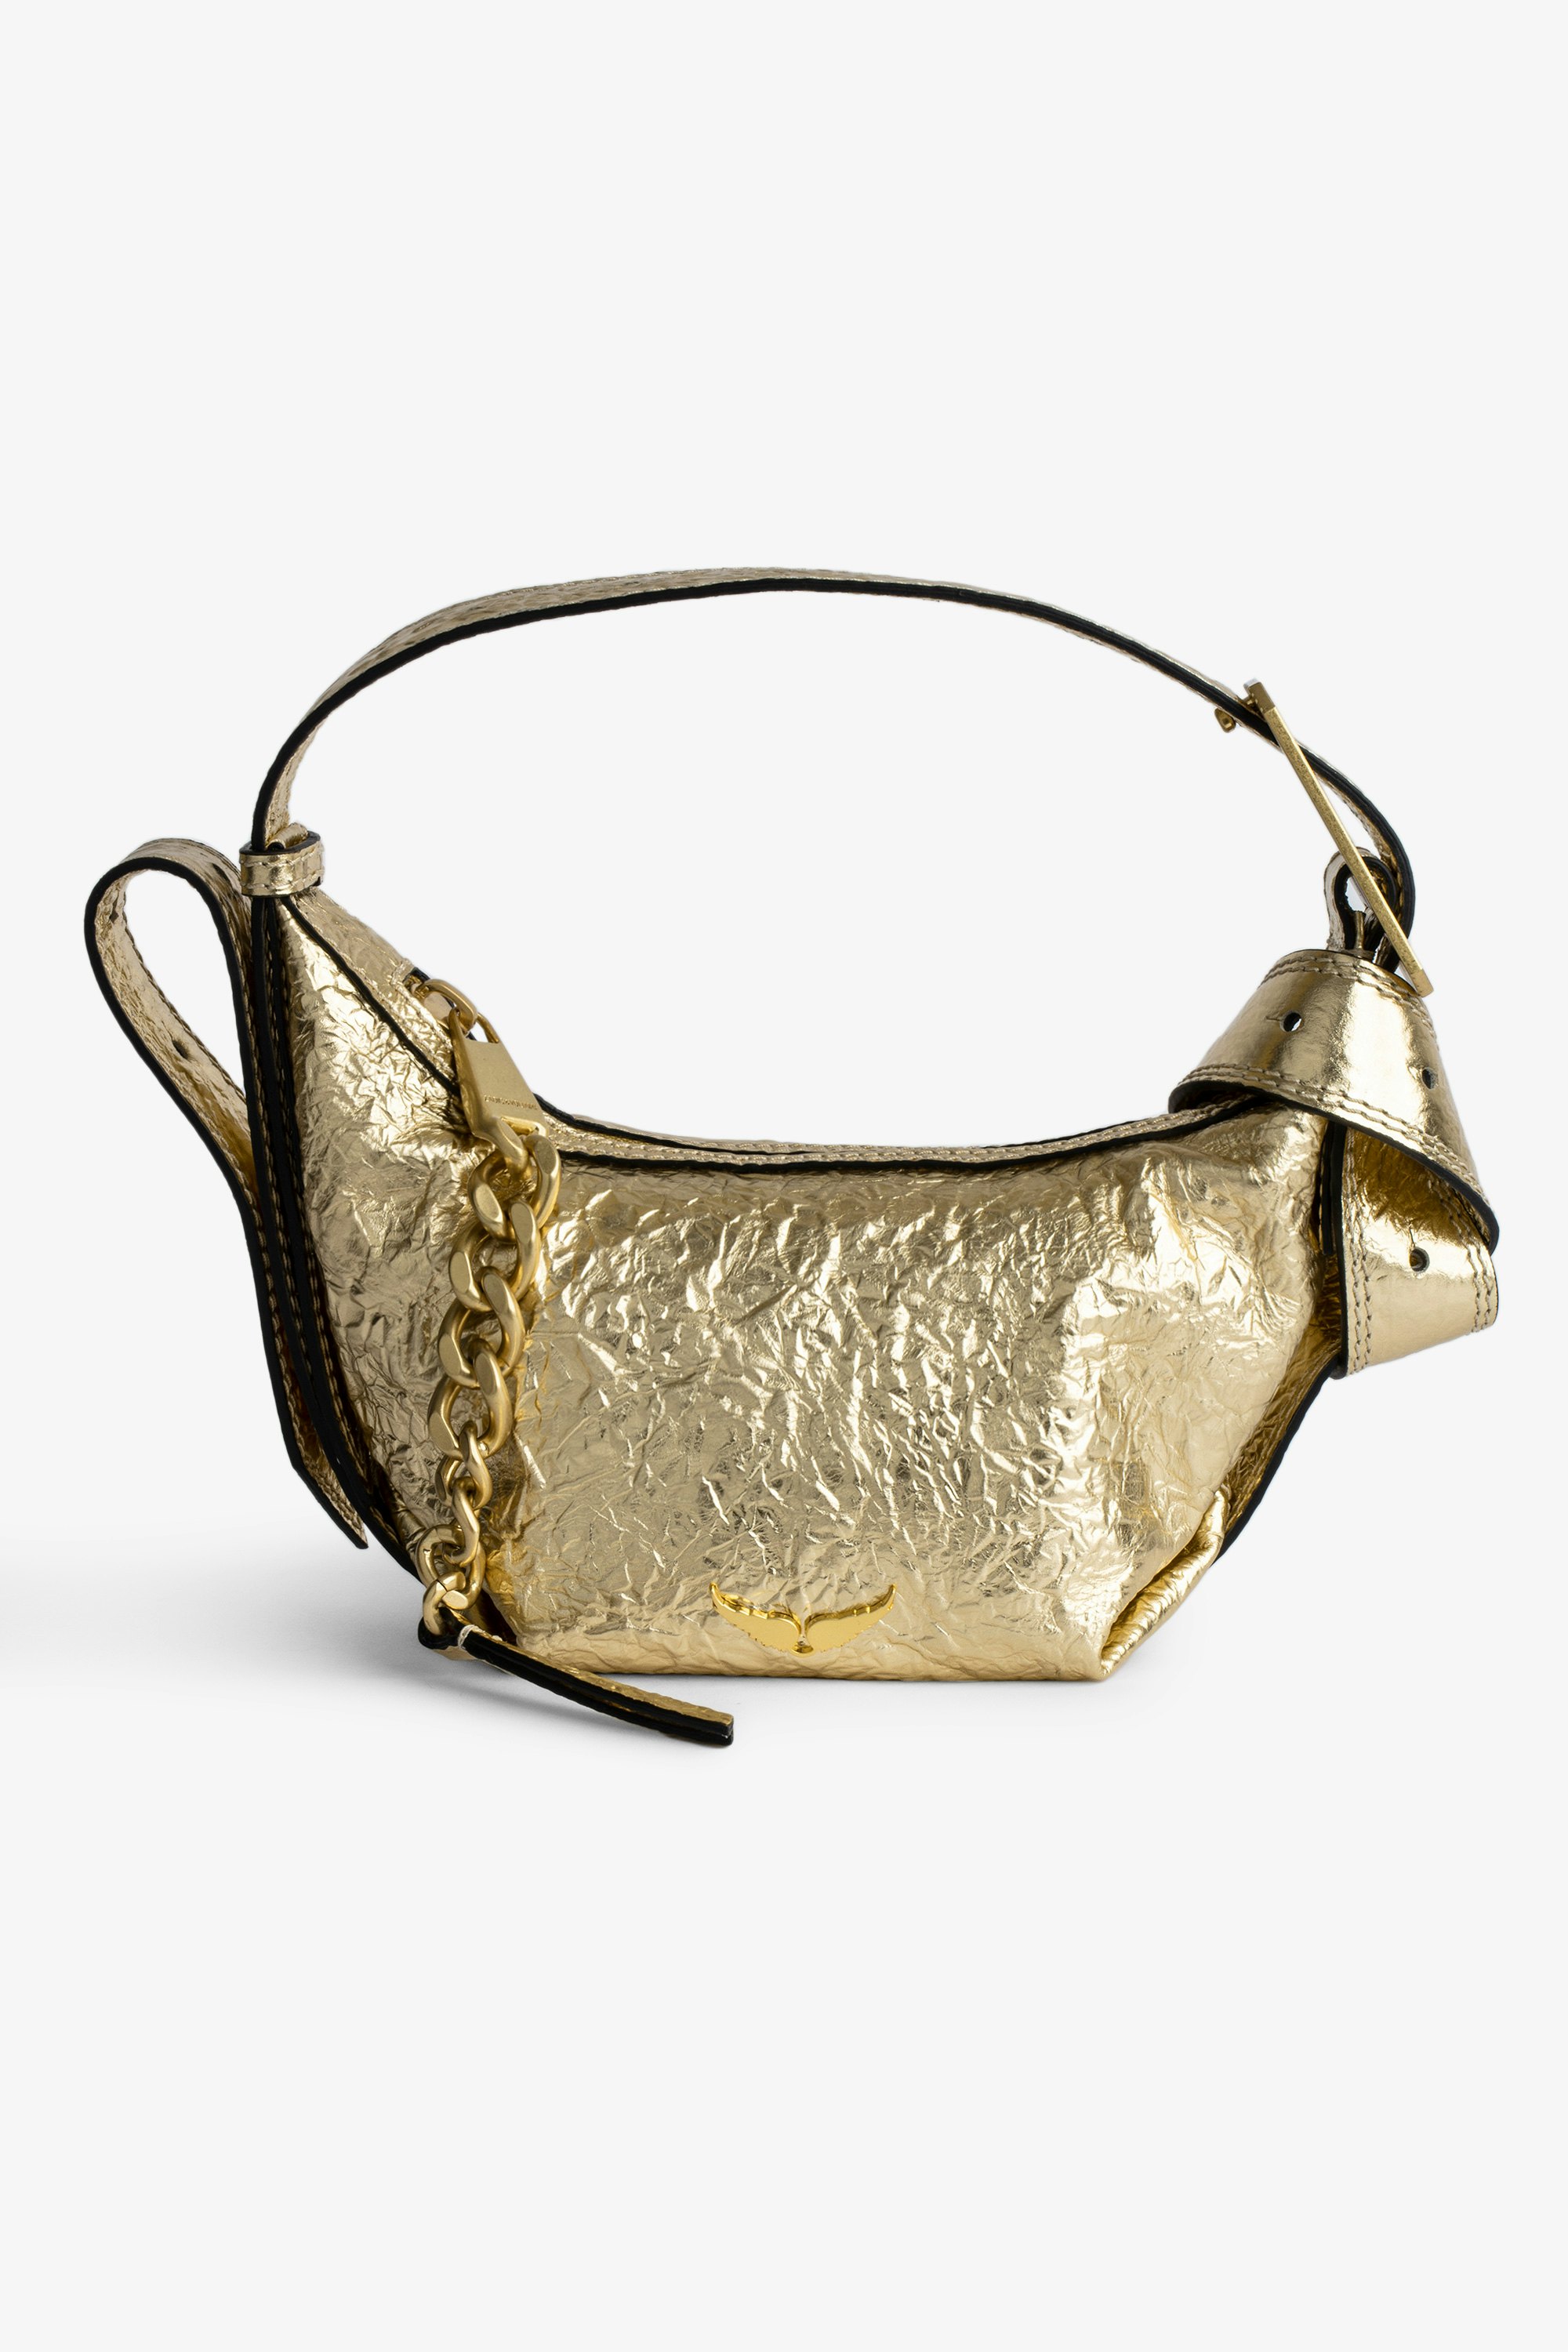 Le Cecilia XS バッグ Women’s Le Cecilia small bag in metallic gold crinkled leather